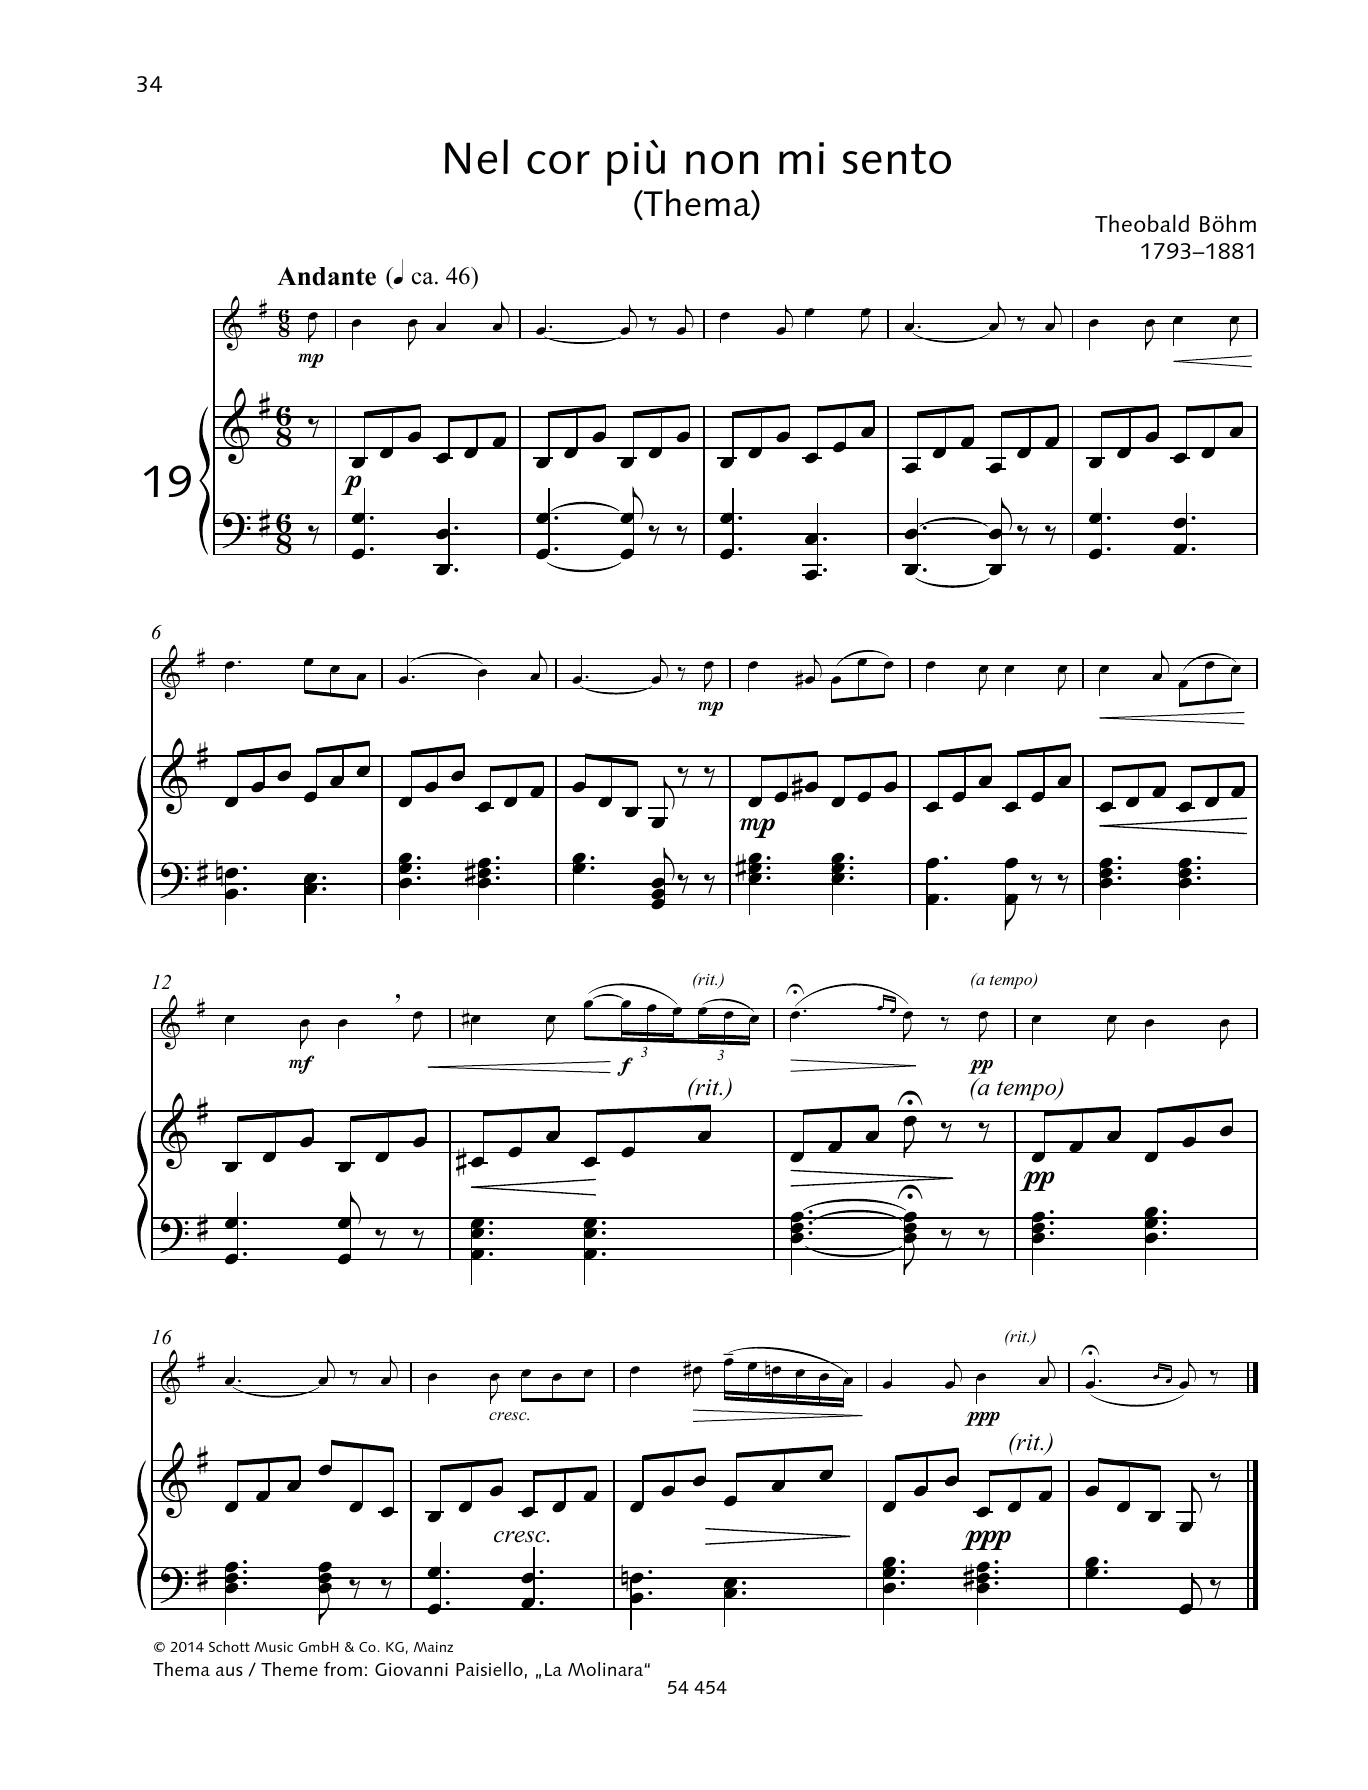 Theobald Böhm Nel Cor Più Non Mi Sento Sheet Music Notes & Chords for Woodwind Solo - Download or Print PDF